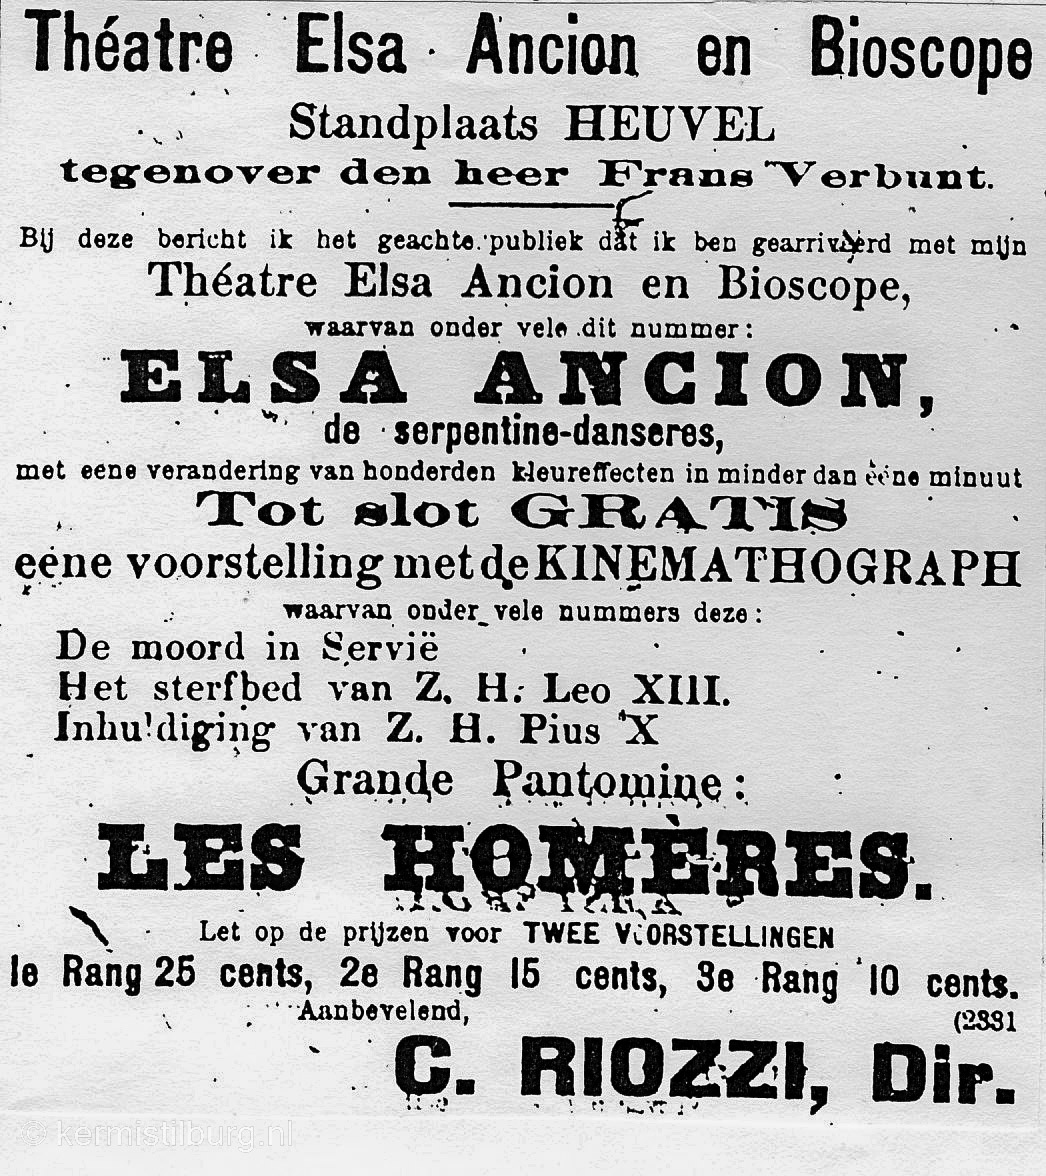 1903, Kermis, Tilburg, Tilburgse kermis, krant